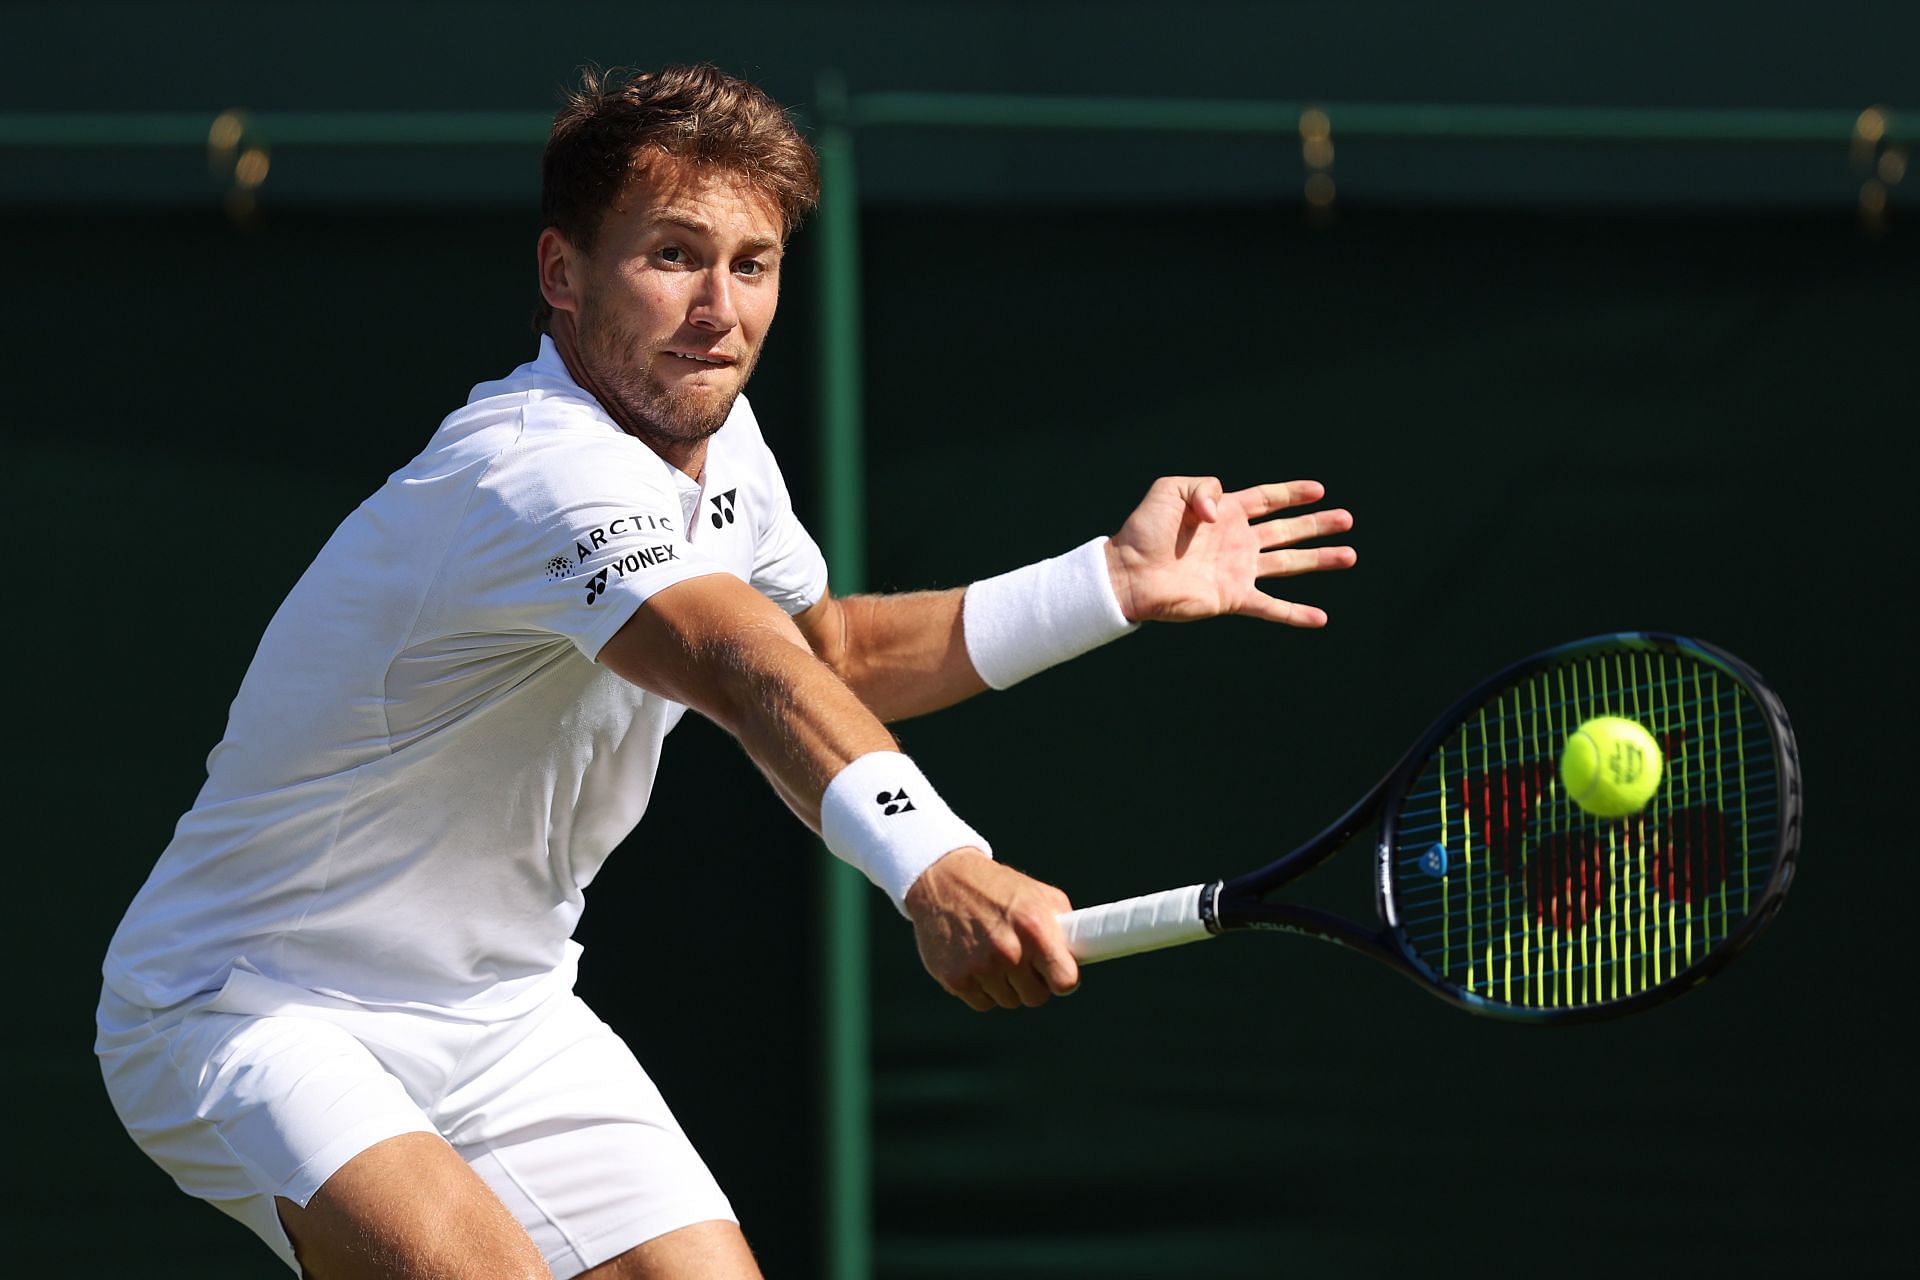 Casper Ruud will look to reach the third round of Wimbledon